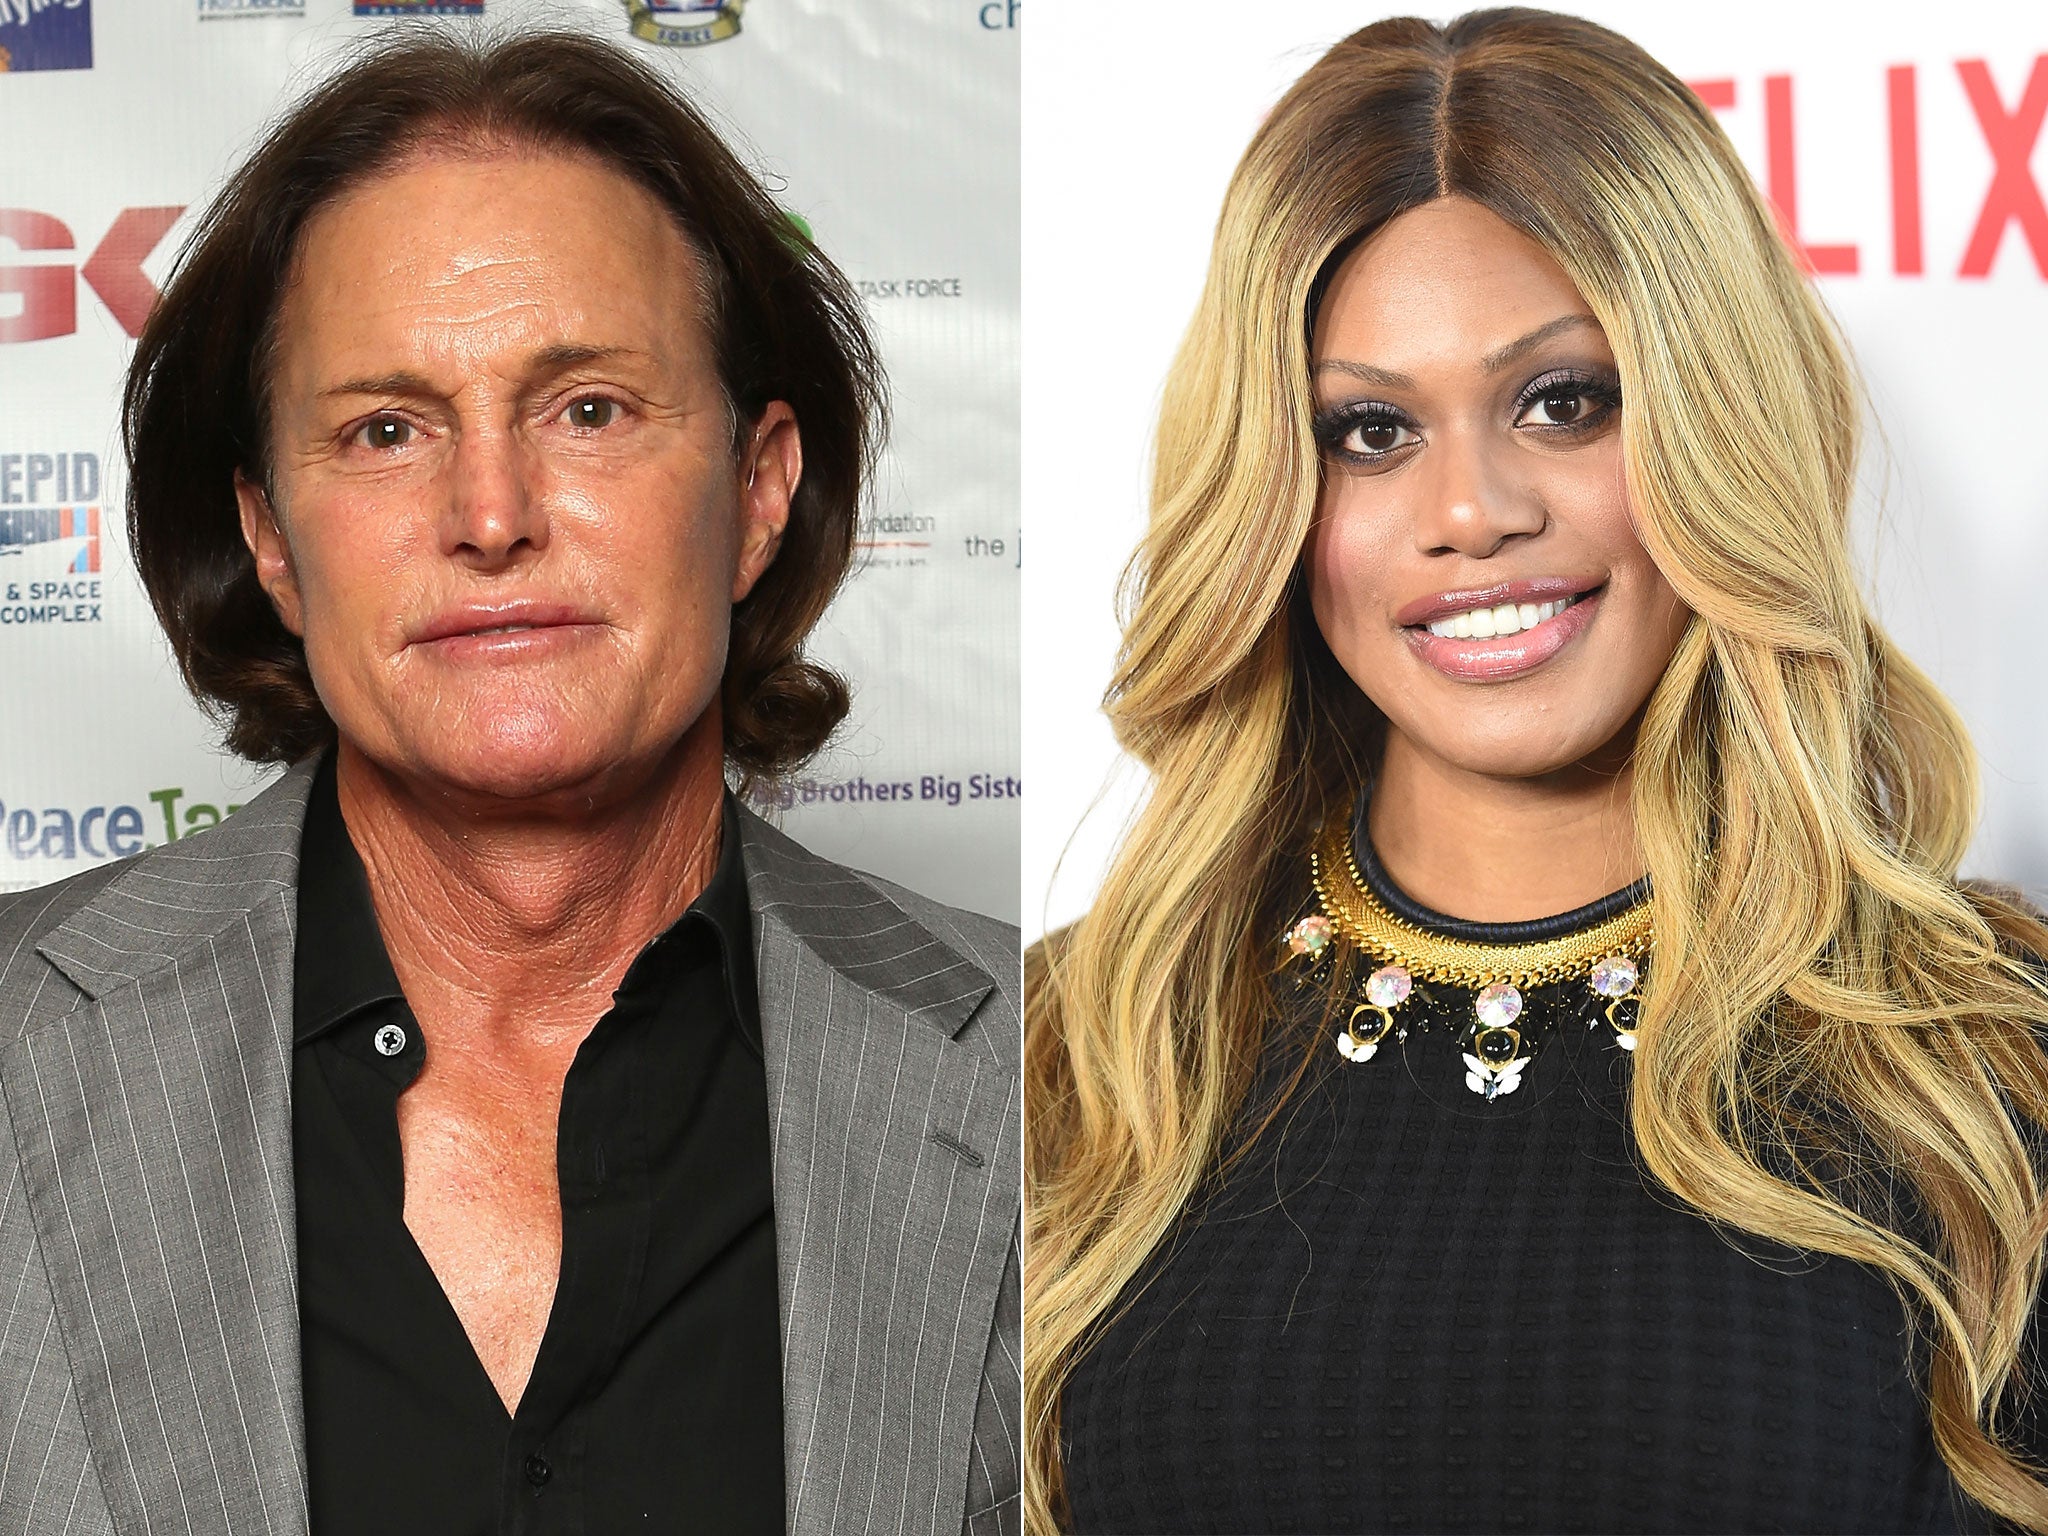 Bruce Jenner has a big fan in transgender actress Laverne Cox